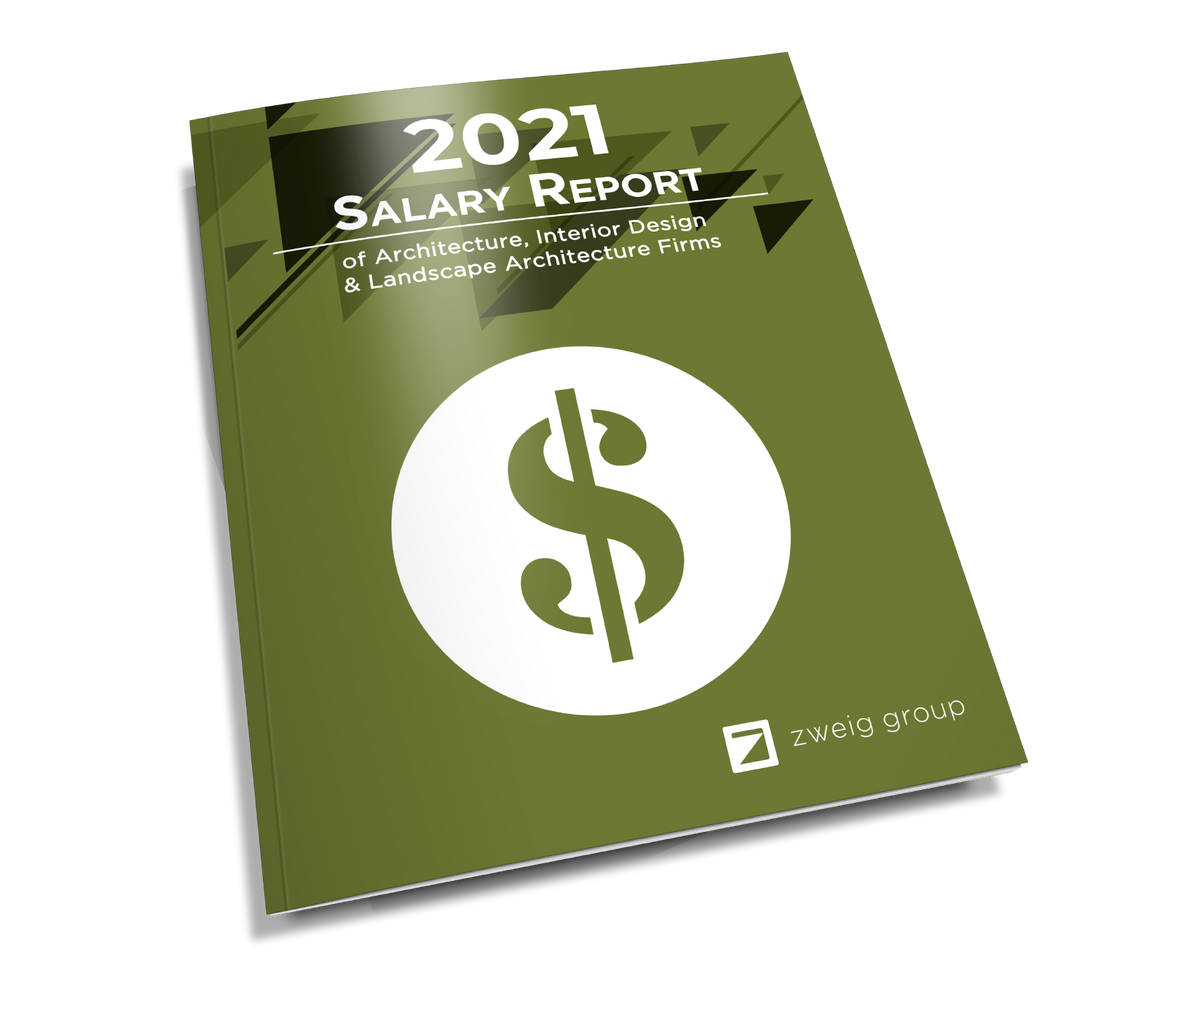 2021 Salary Survey Report of Architecture, Interior Design & Landscape Architecture Firms Cover